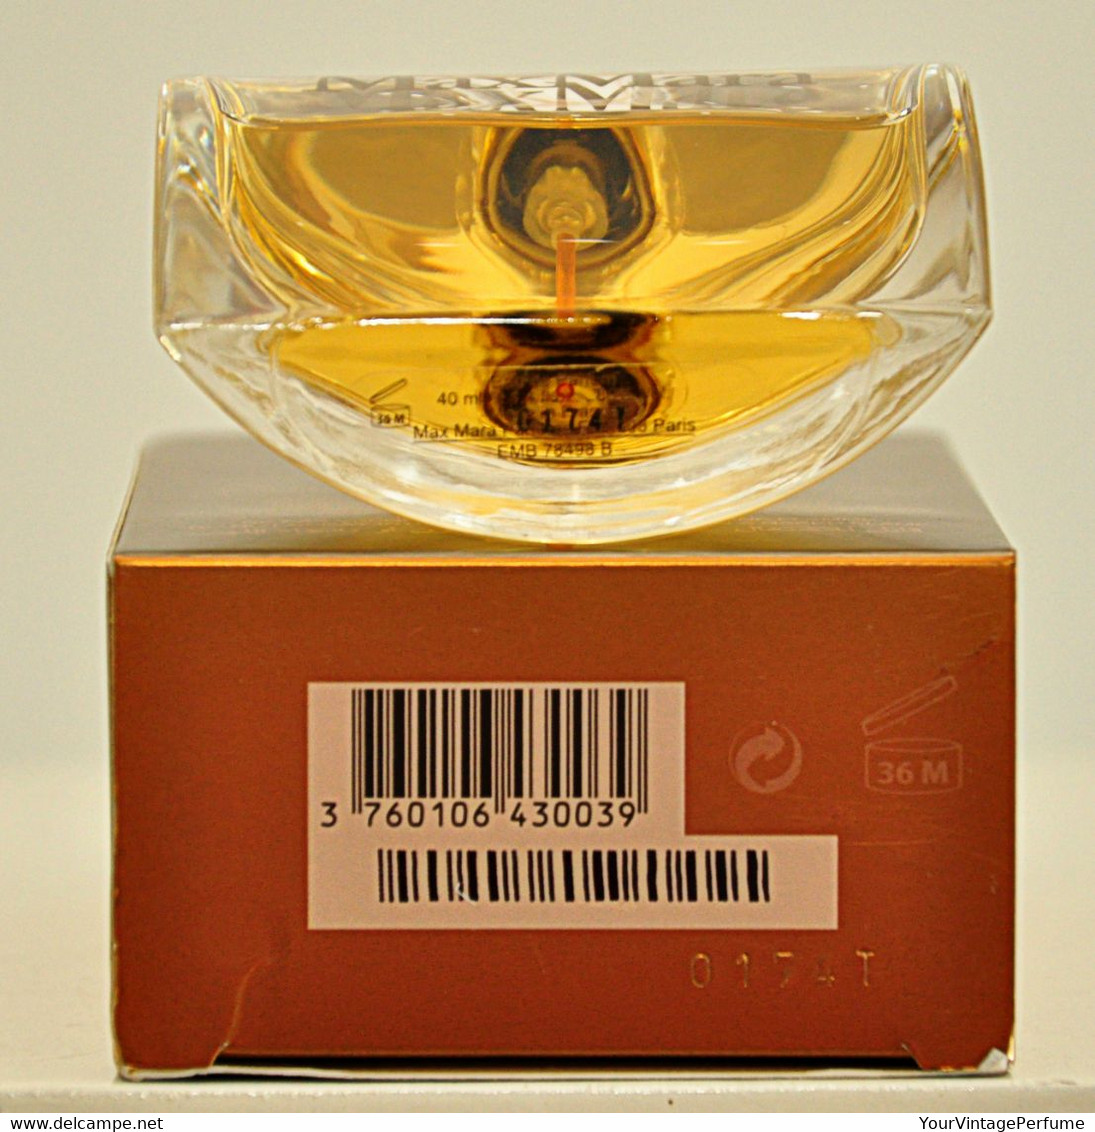 Max Mara Classic Eau De Parfum Edp 40ml 1.4 Fl. Oz. Spray Perfume For Woman Super Rare Vintage Old 2004 - Women